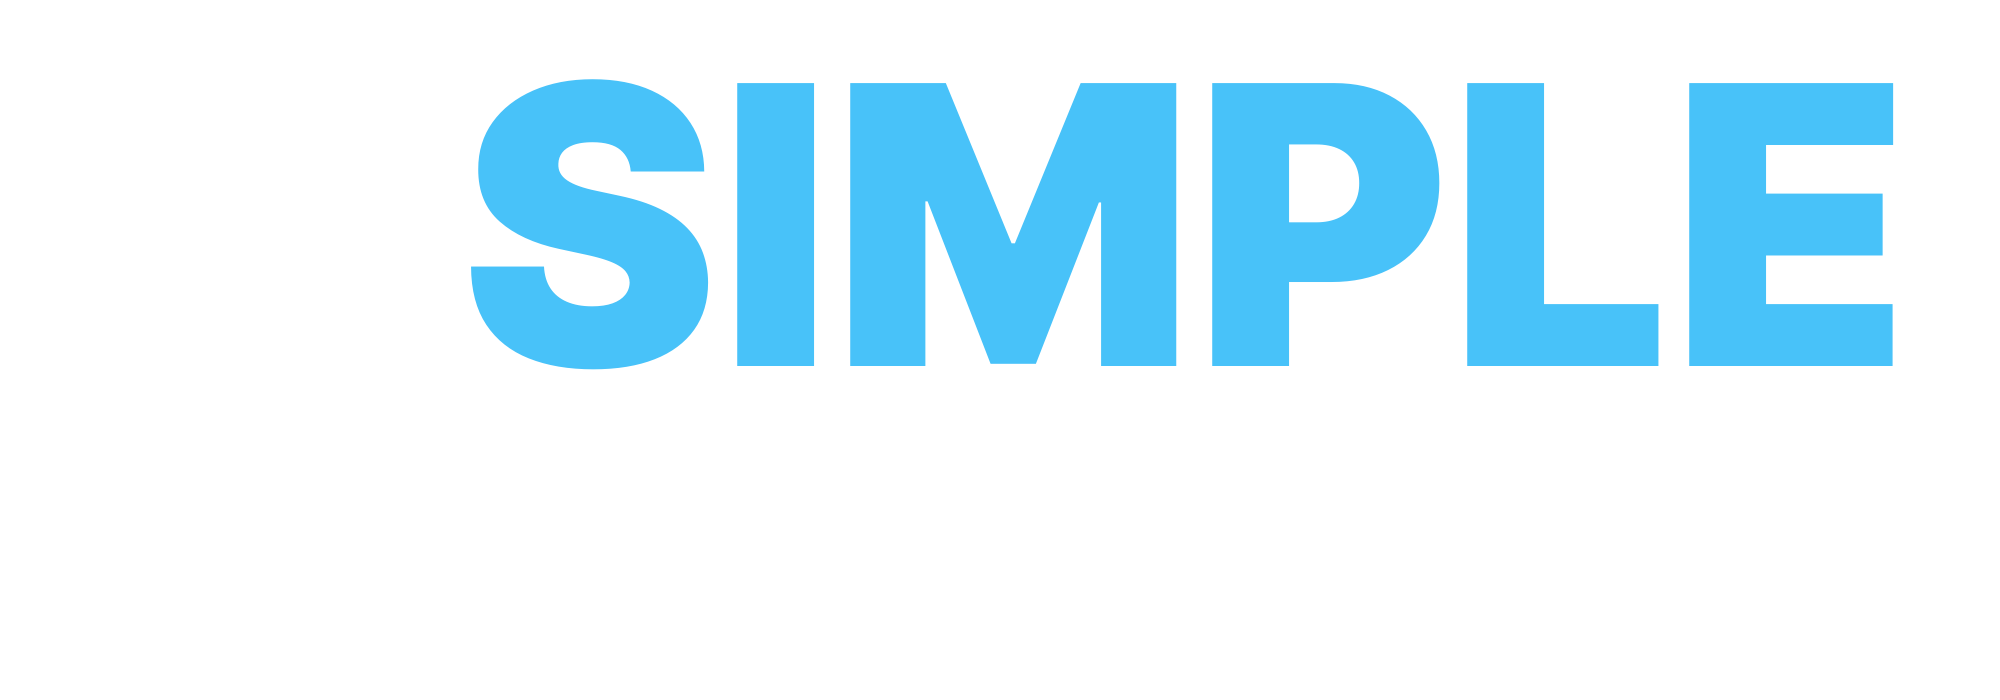 Simple Challenge Logo 2000 x 700 2000 x 700-1 2